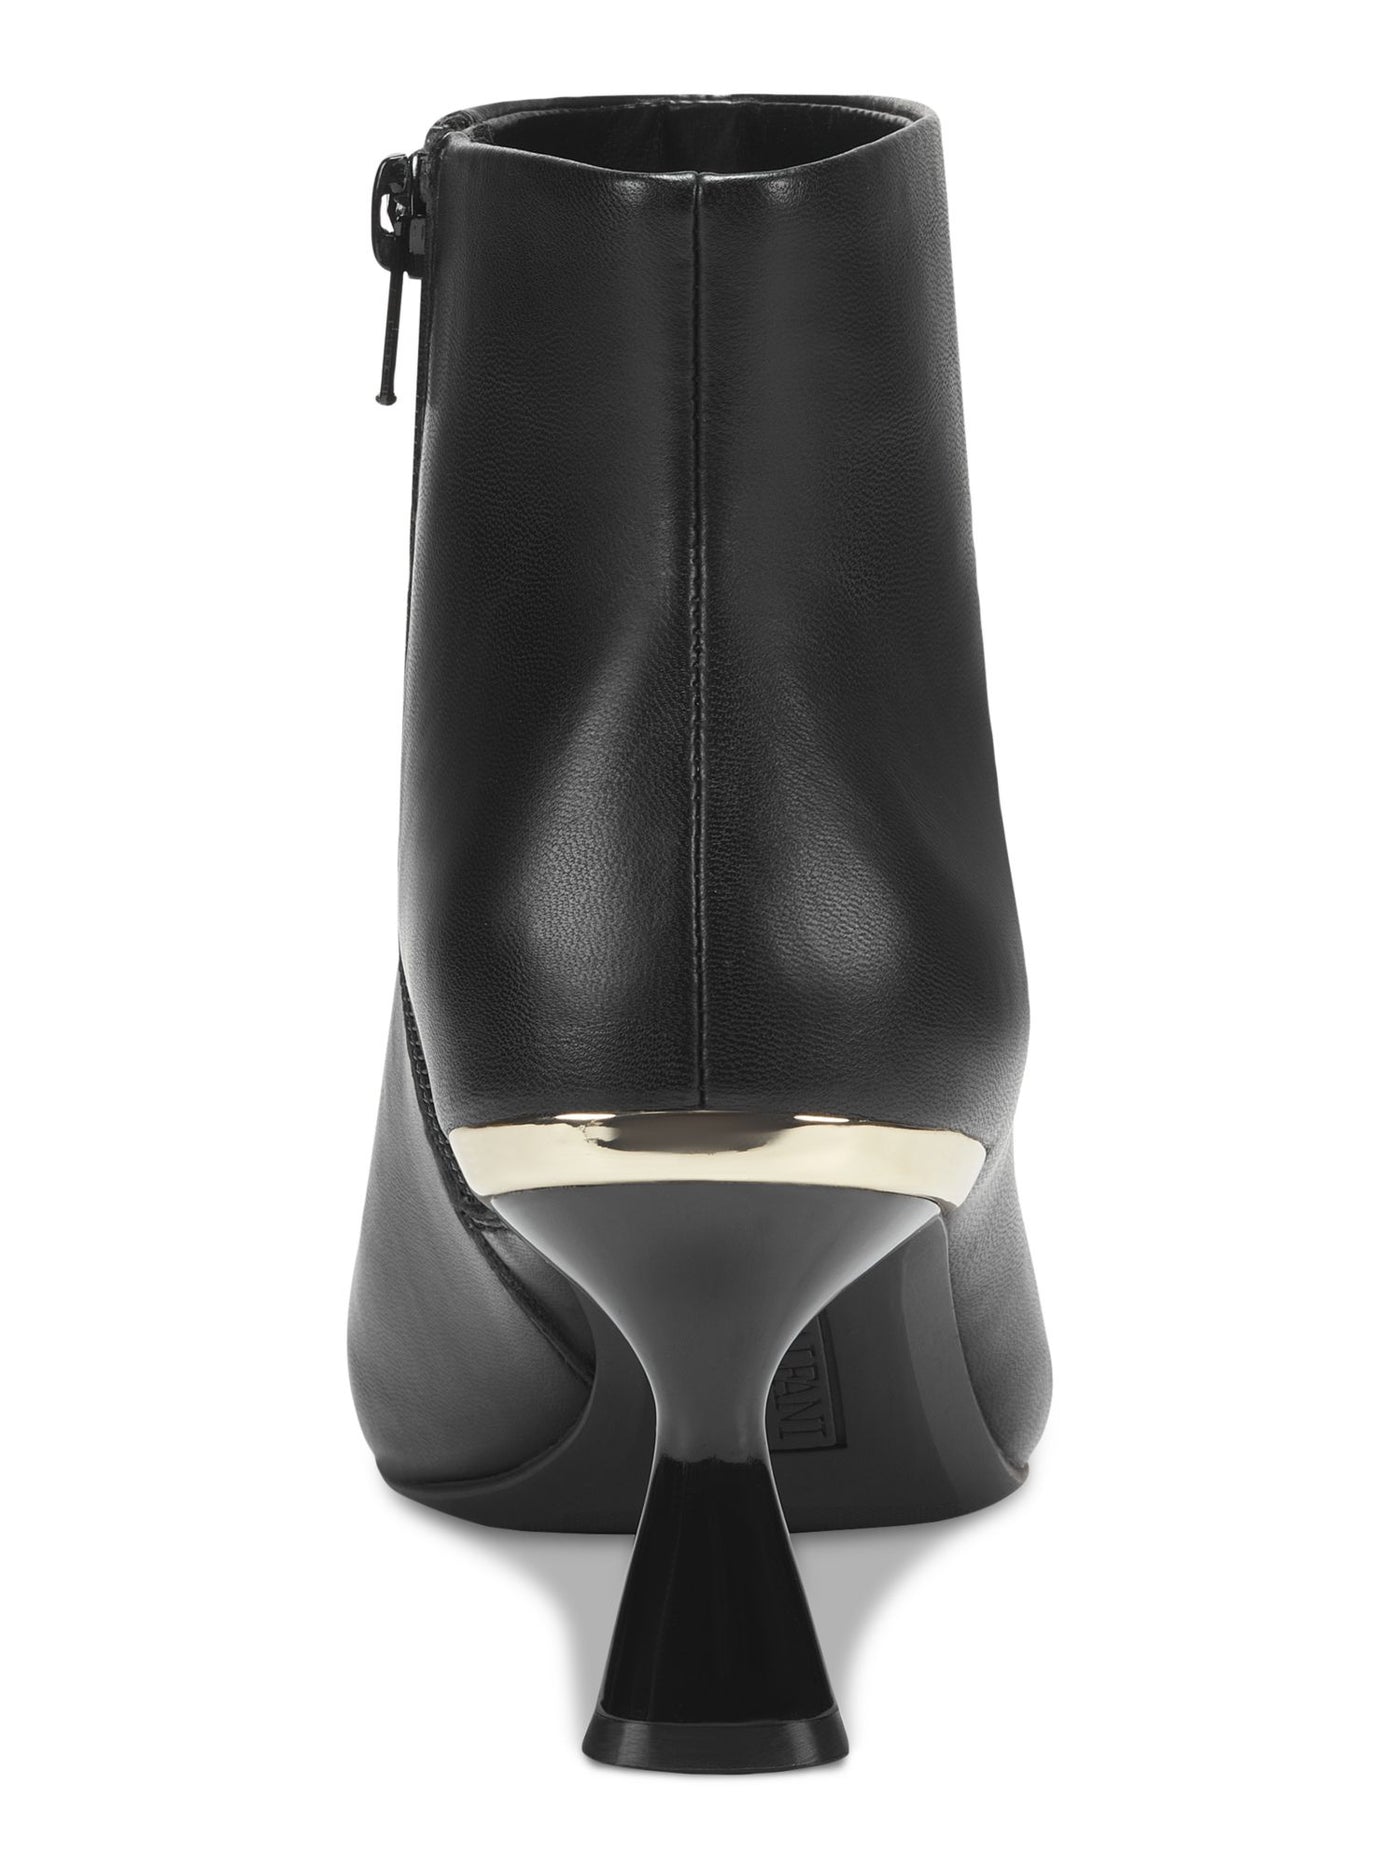 ALFANI Womens Black Cushioned Celleste Pointed Toe Kitten Heel Zip-Up Dress Boots 6.5 M